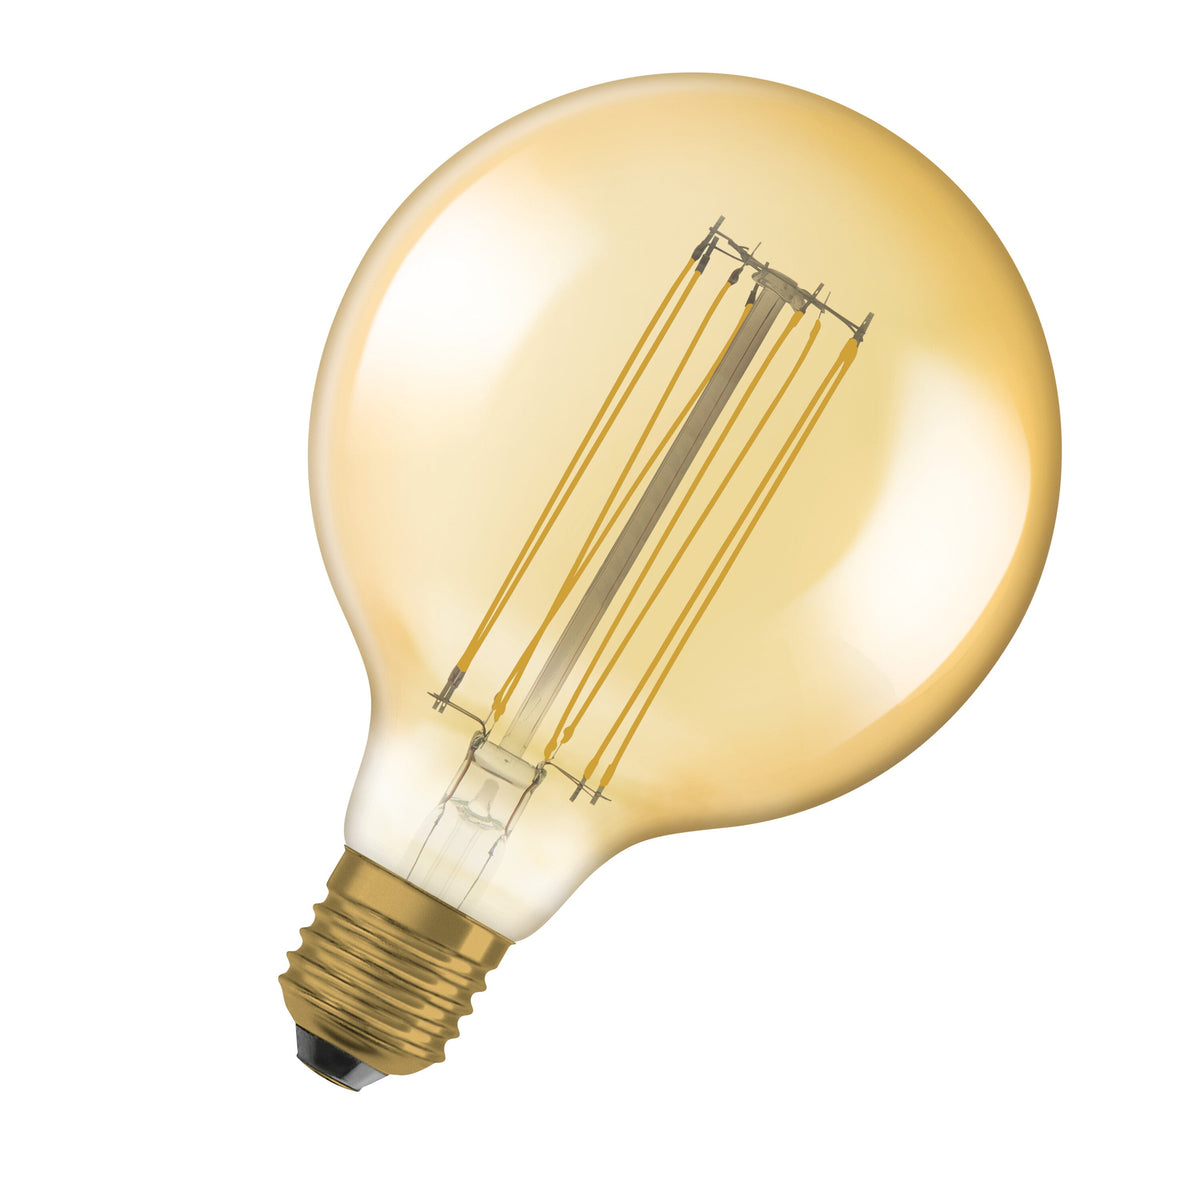 OSRAM Vintage 1906 LED-Lampe, Gold-Tönung, 8,8W, 806lm